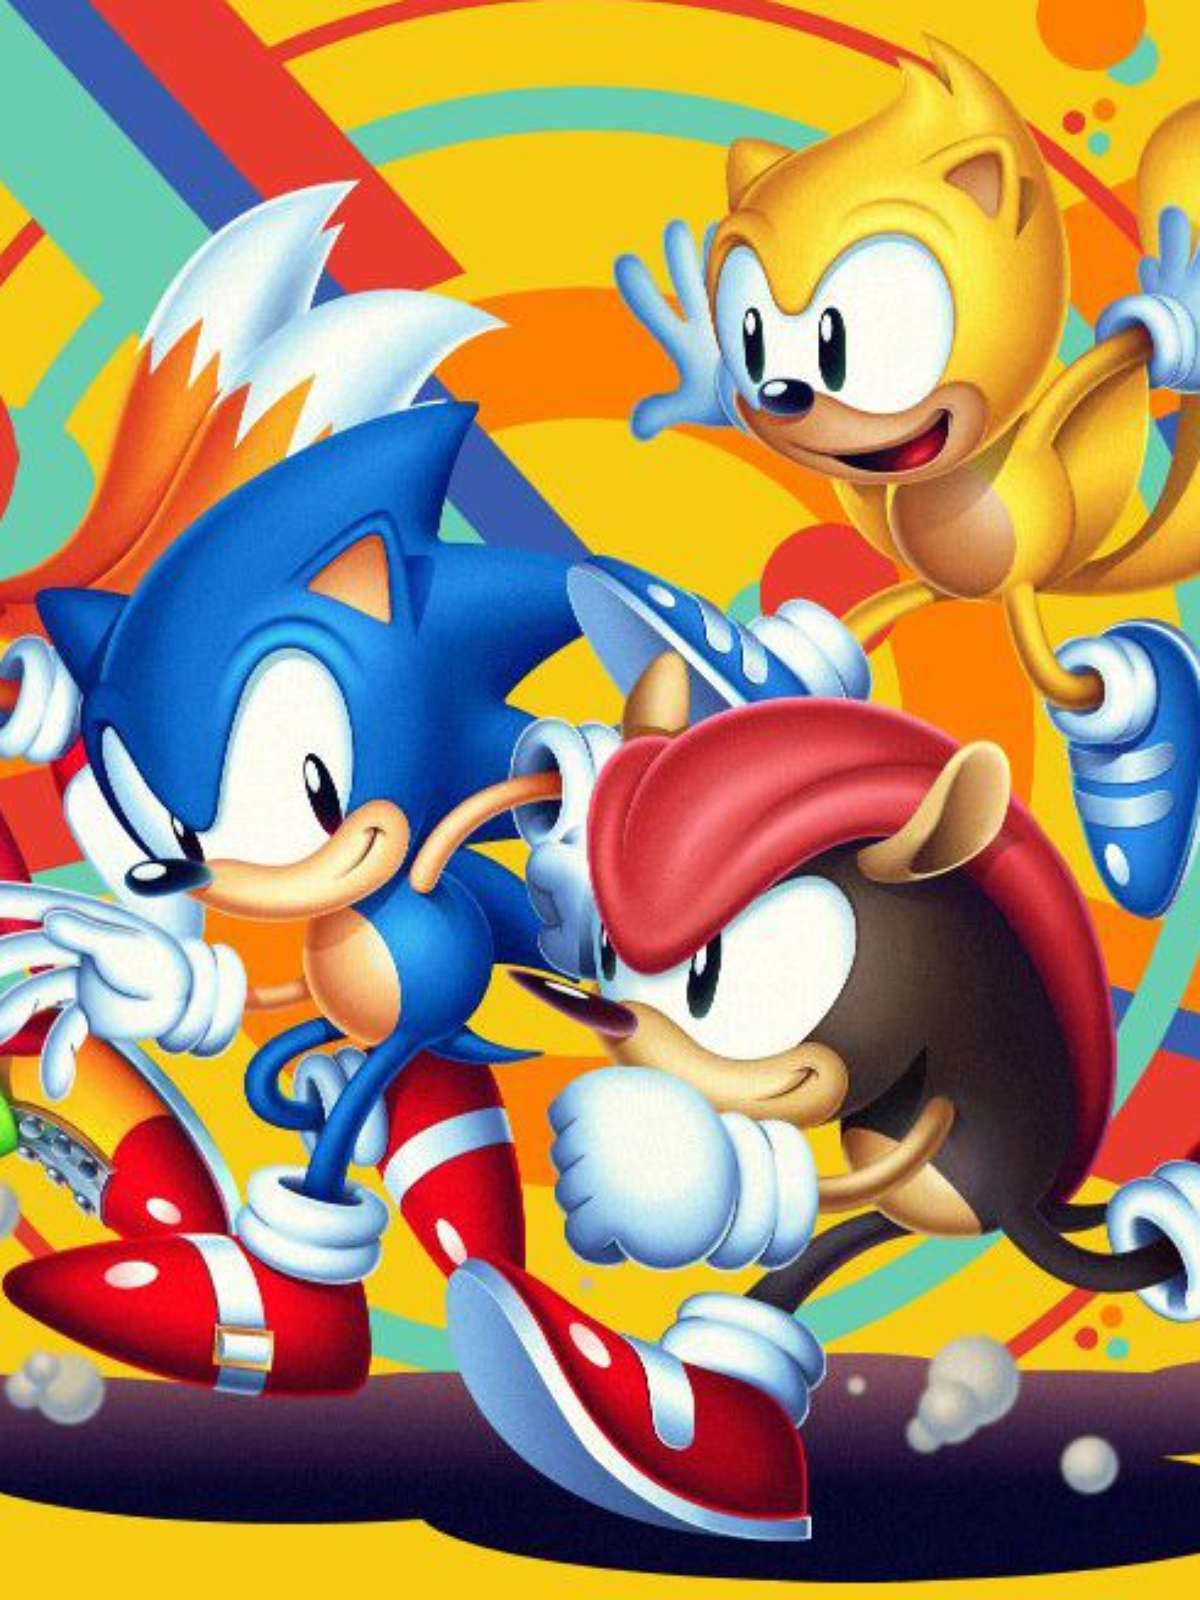 Os Novos Jogos de PS3 e XBOX 360 2023 (Sonic Mania, Doki Doki